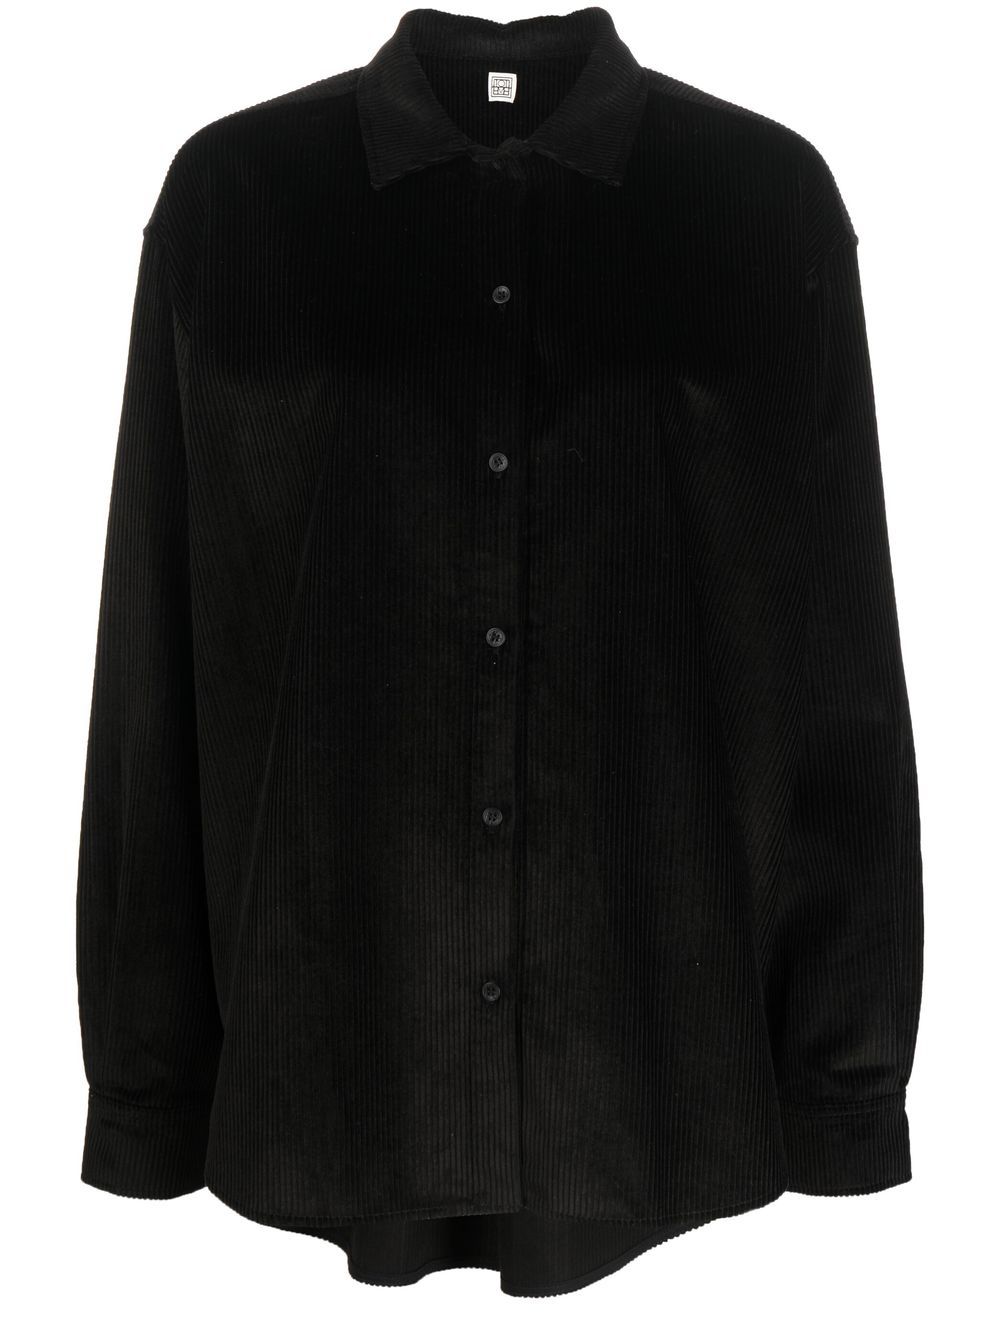 TOTEME long-sleeved corduroy shirt - Black